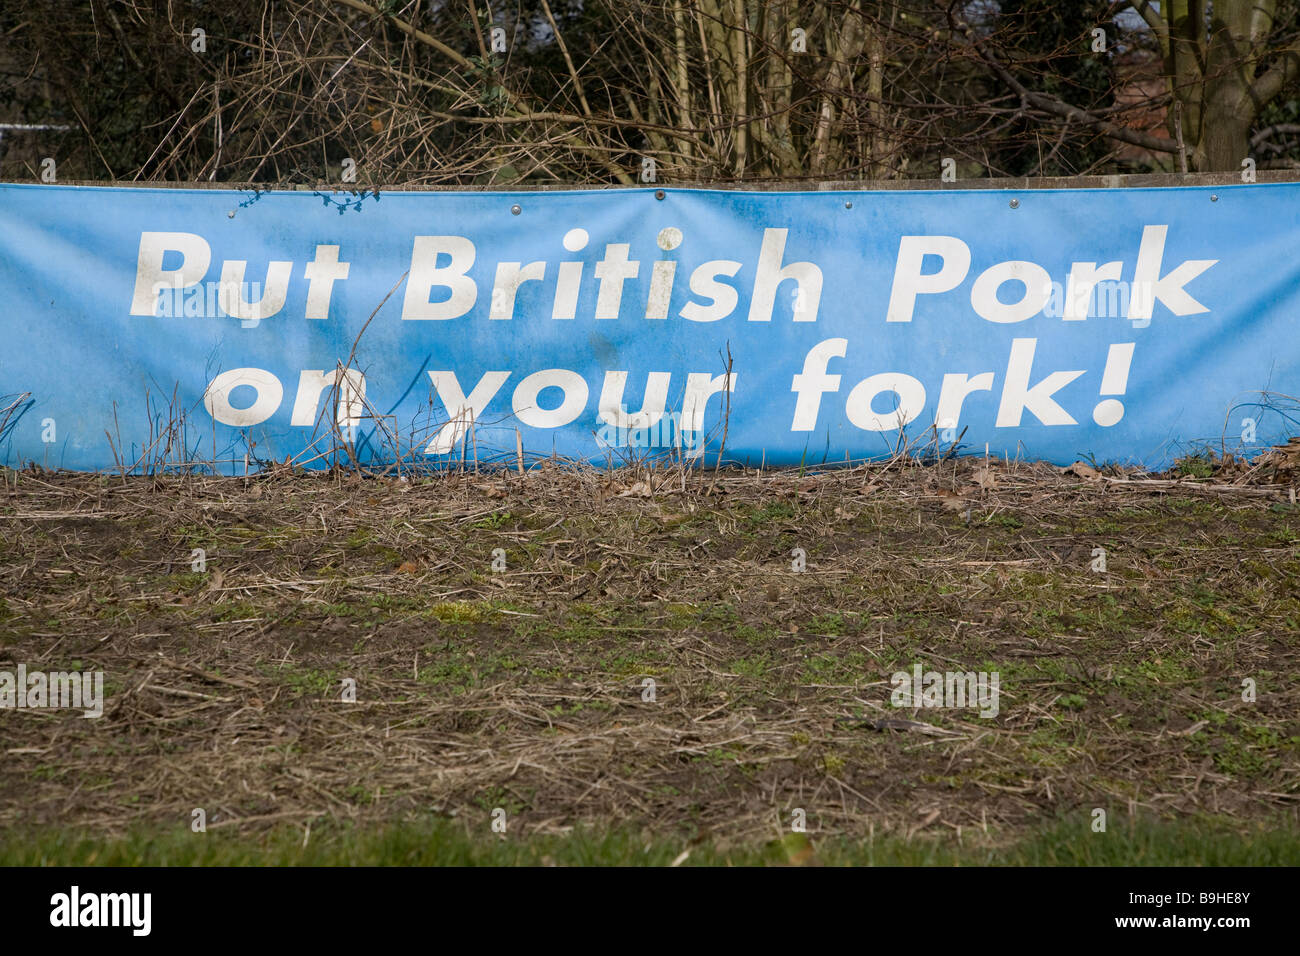 Put British Pork on your fork  advertising sign Stock Photo